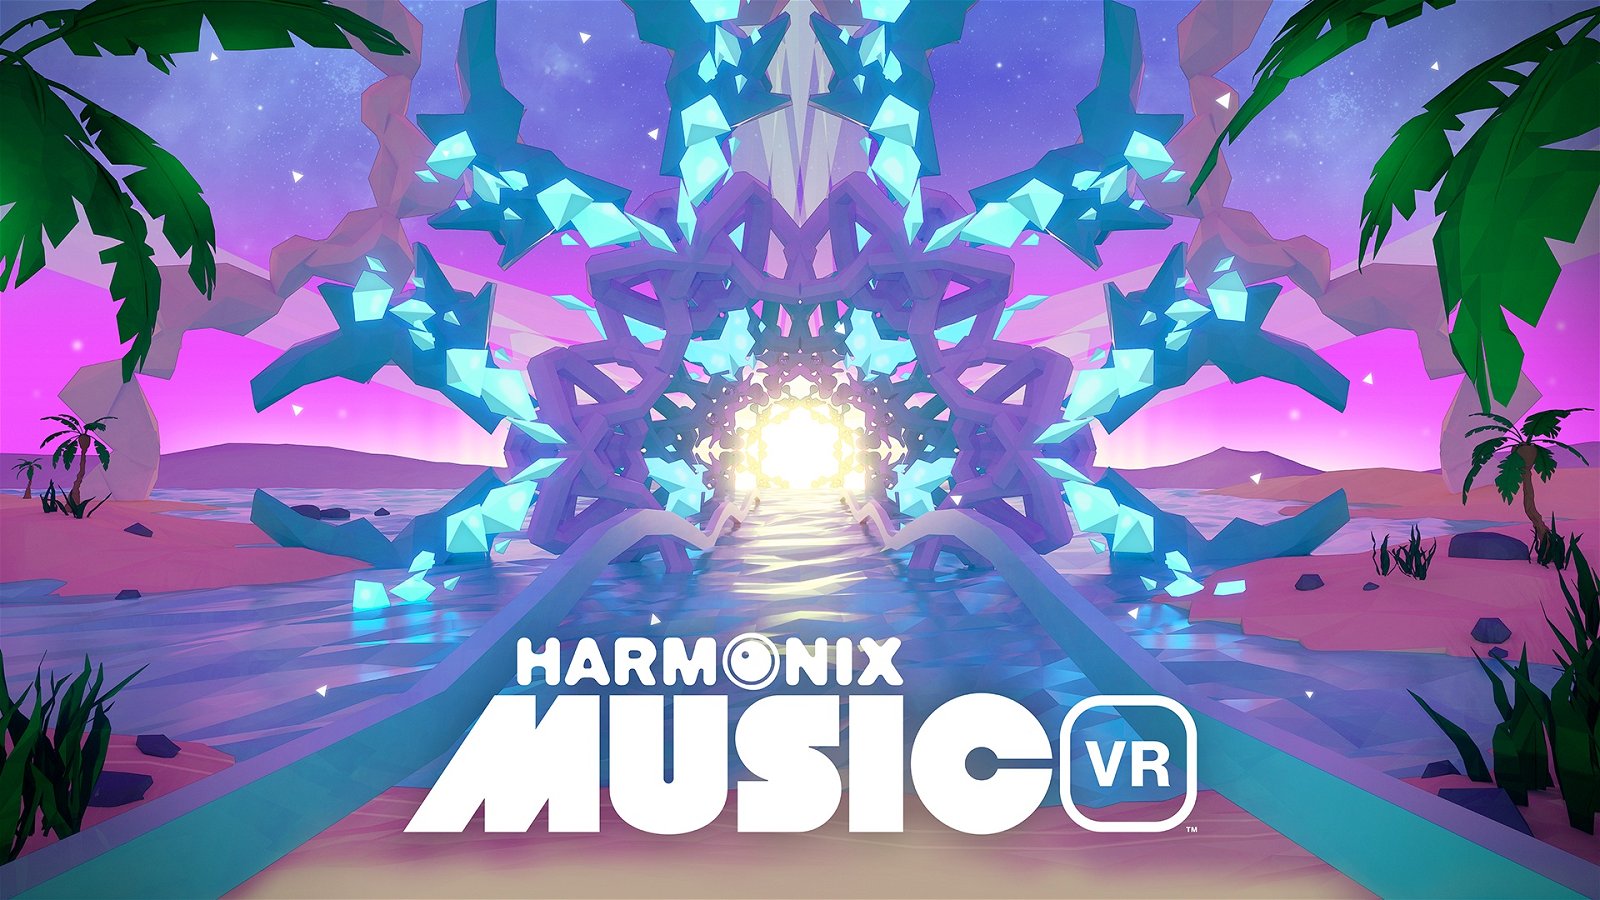 Image of Harmonix Music VR